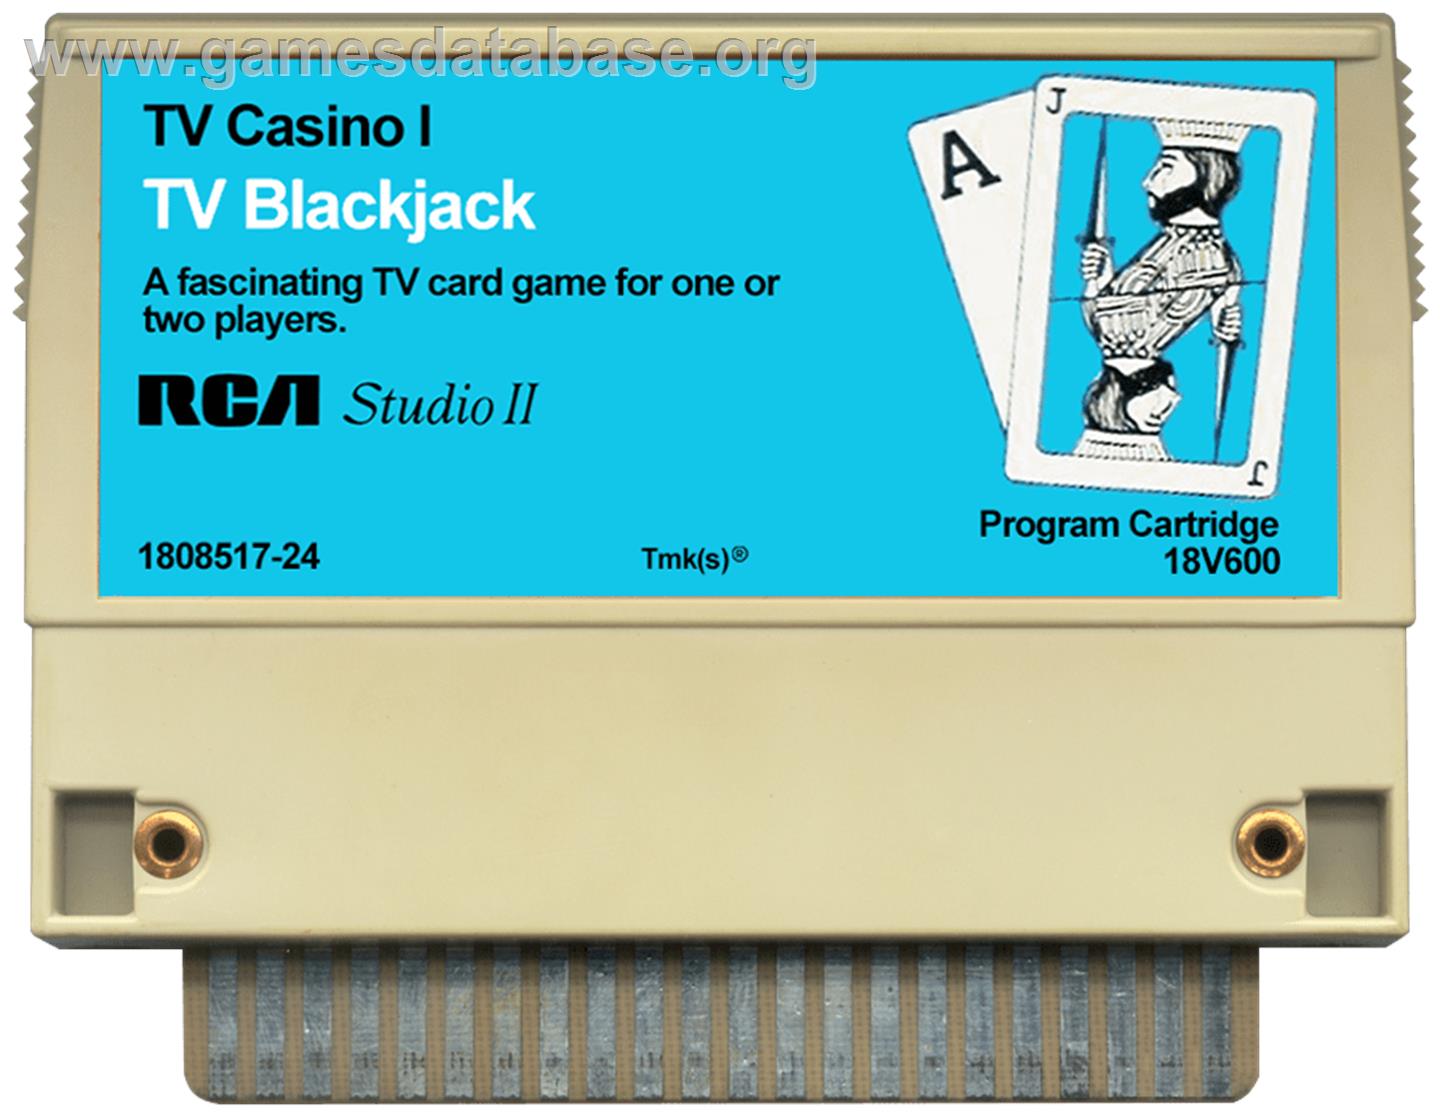 TV Casino I - Blackjack - RCA Studio II - Artwork - Cartridge